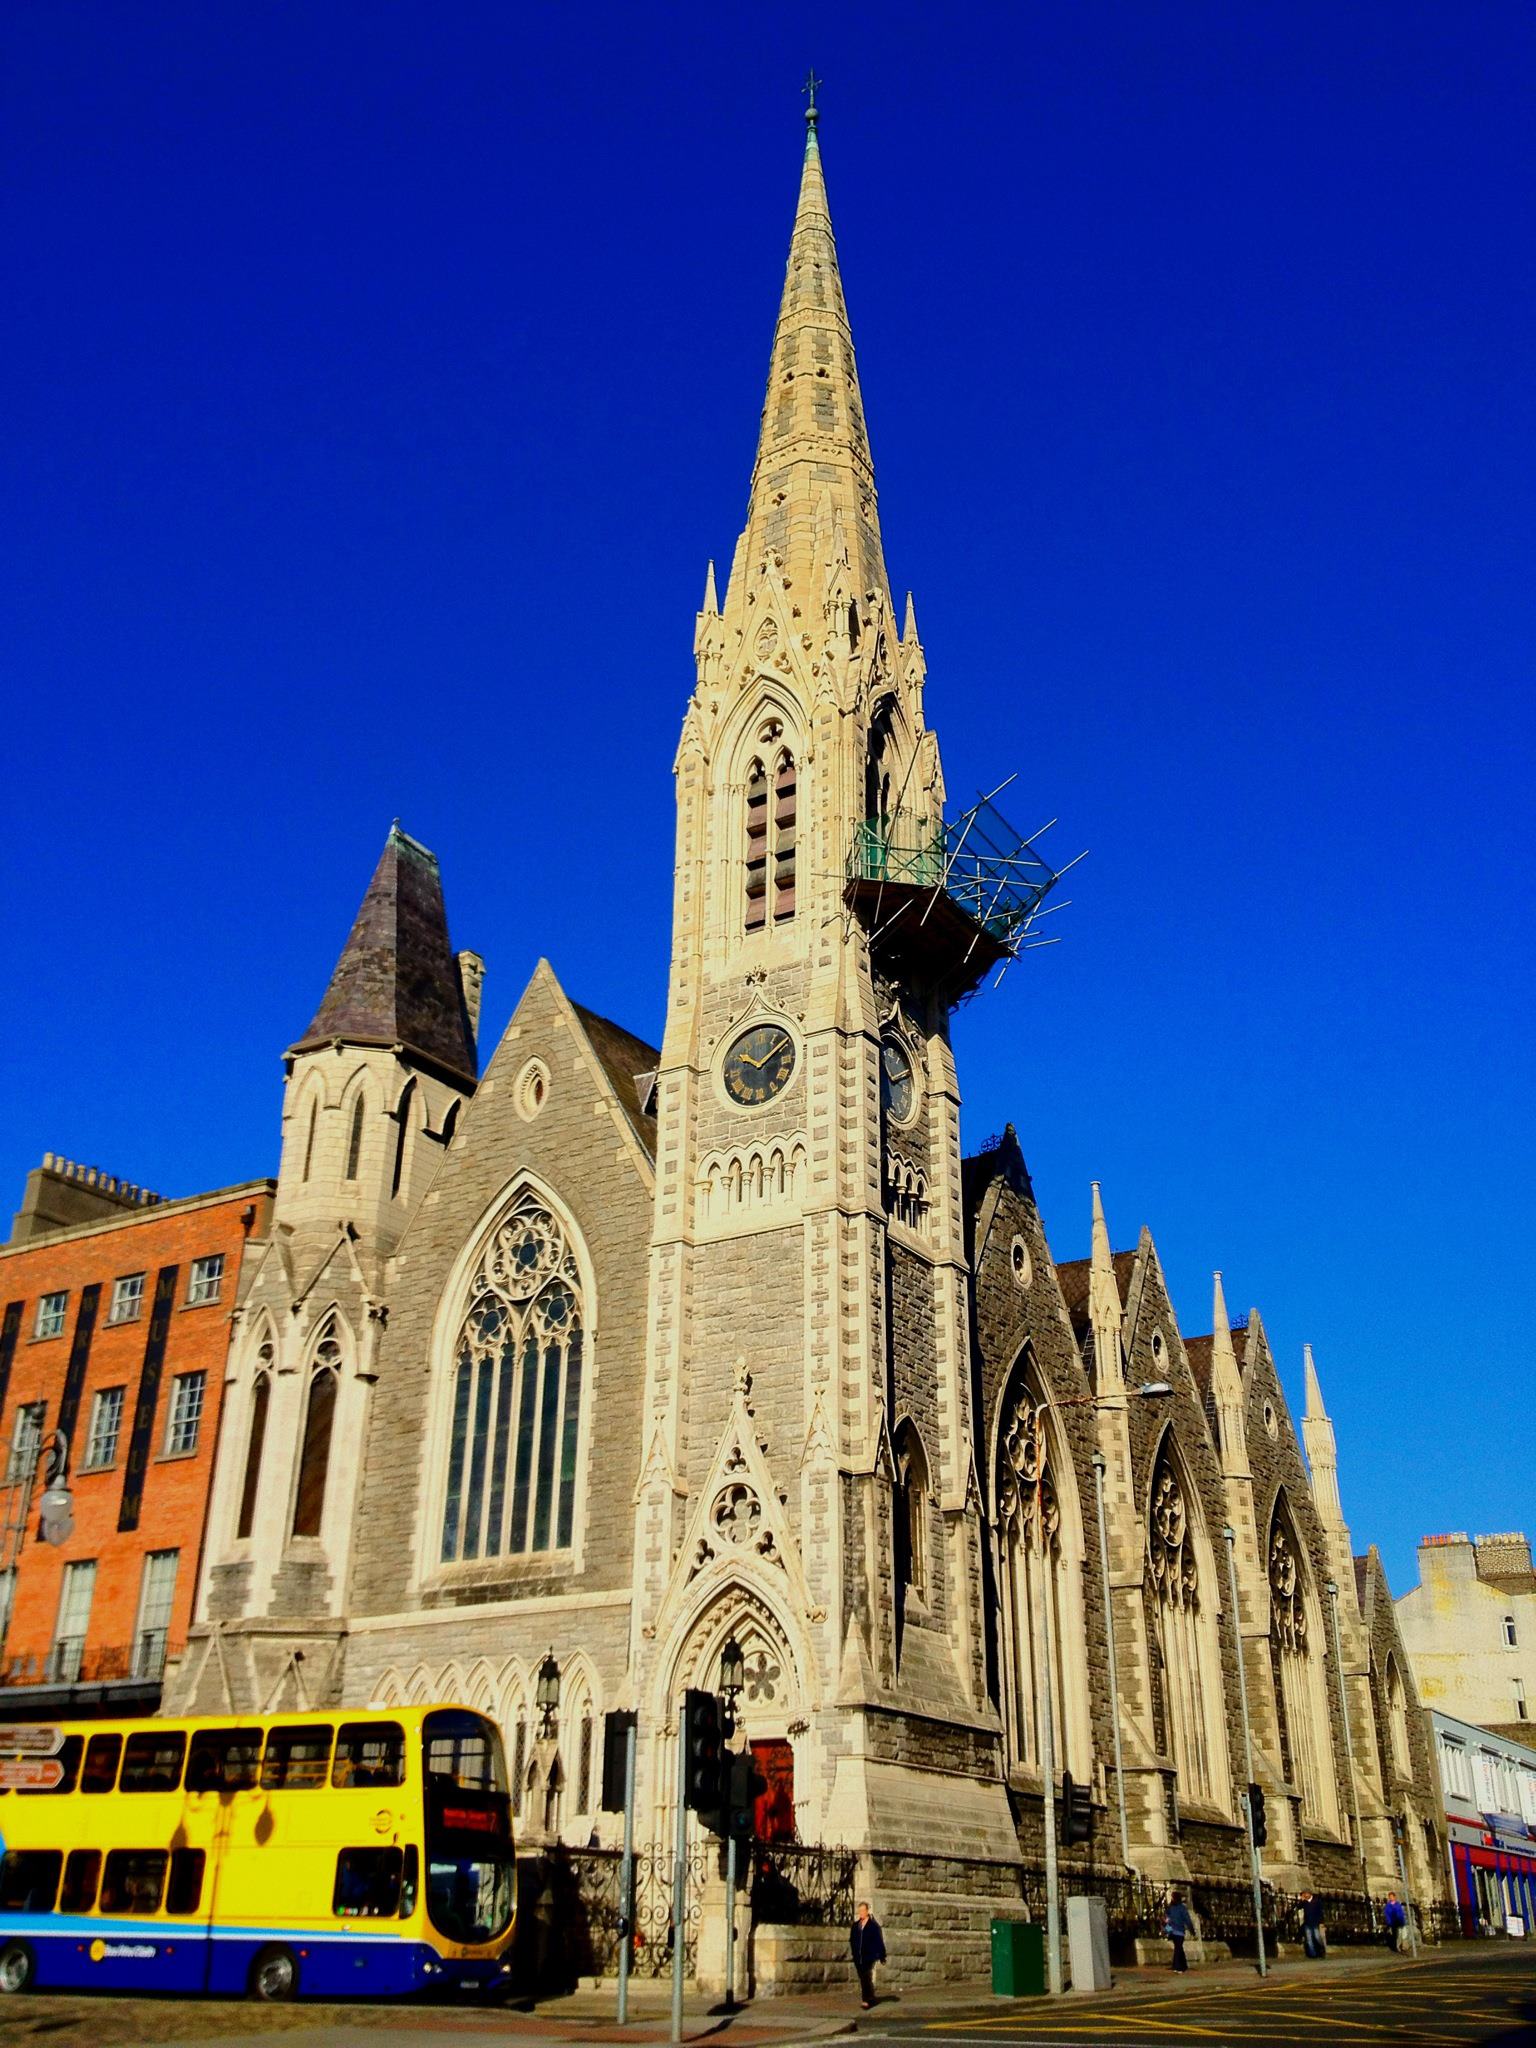 Dublin (ダブリン), Ireland 🇮🇪